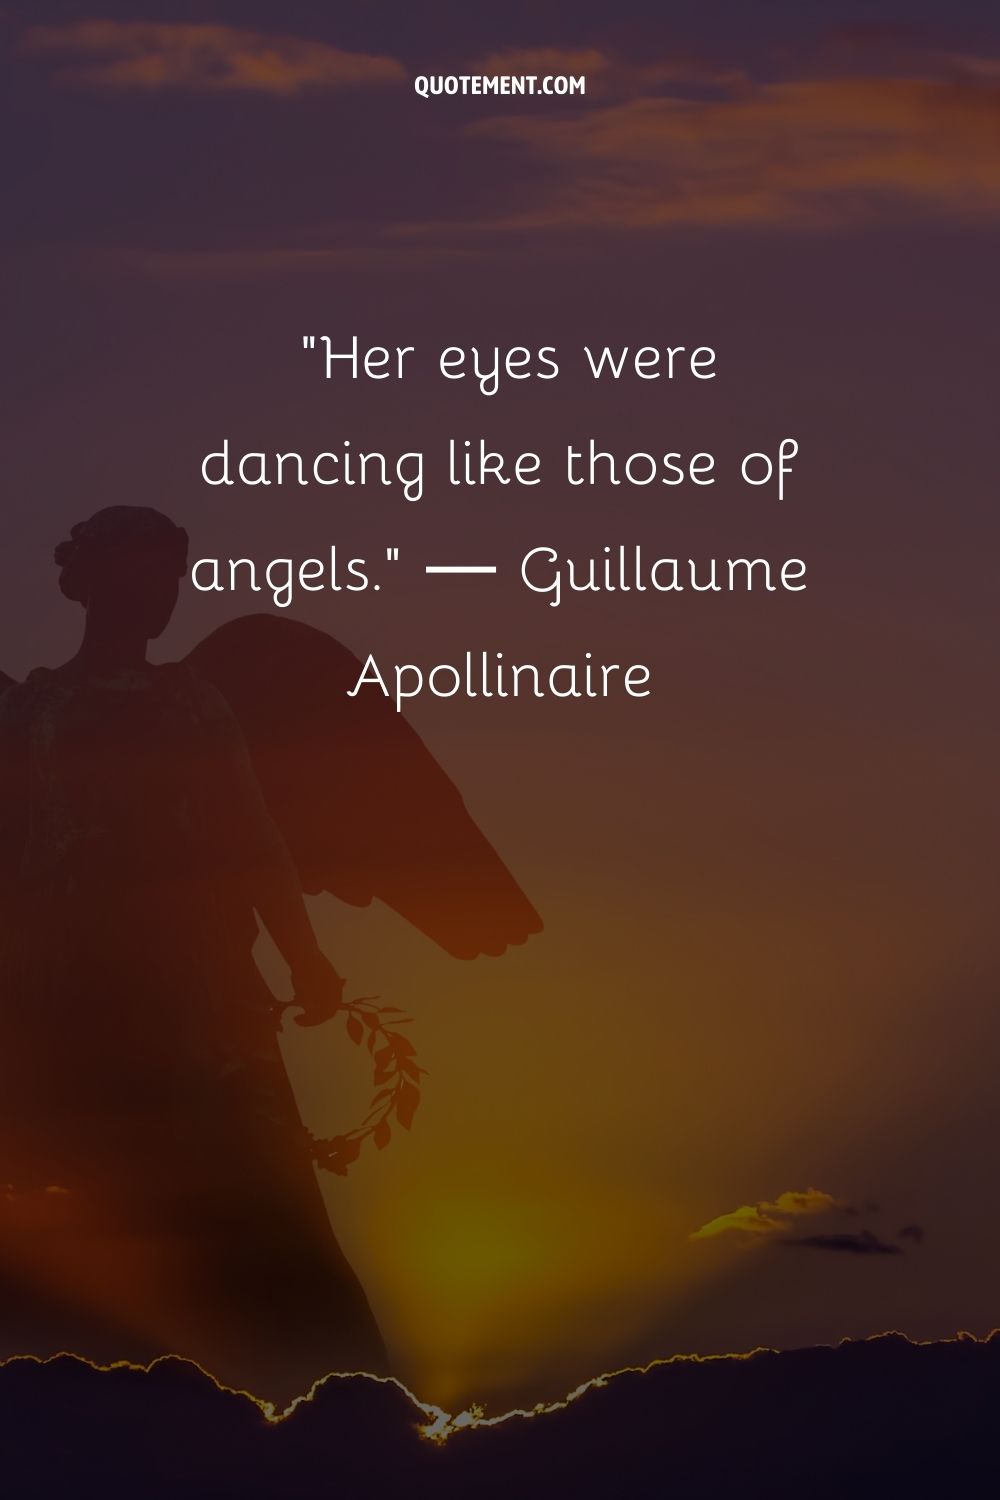 Her eyes were dancing like those of angels.